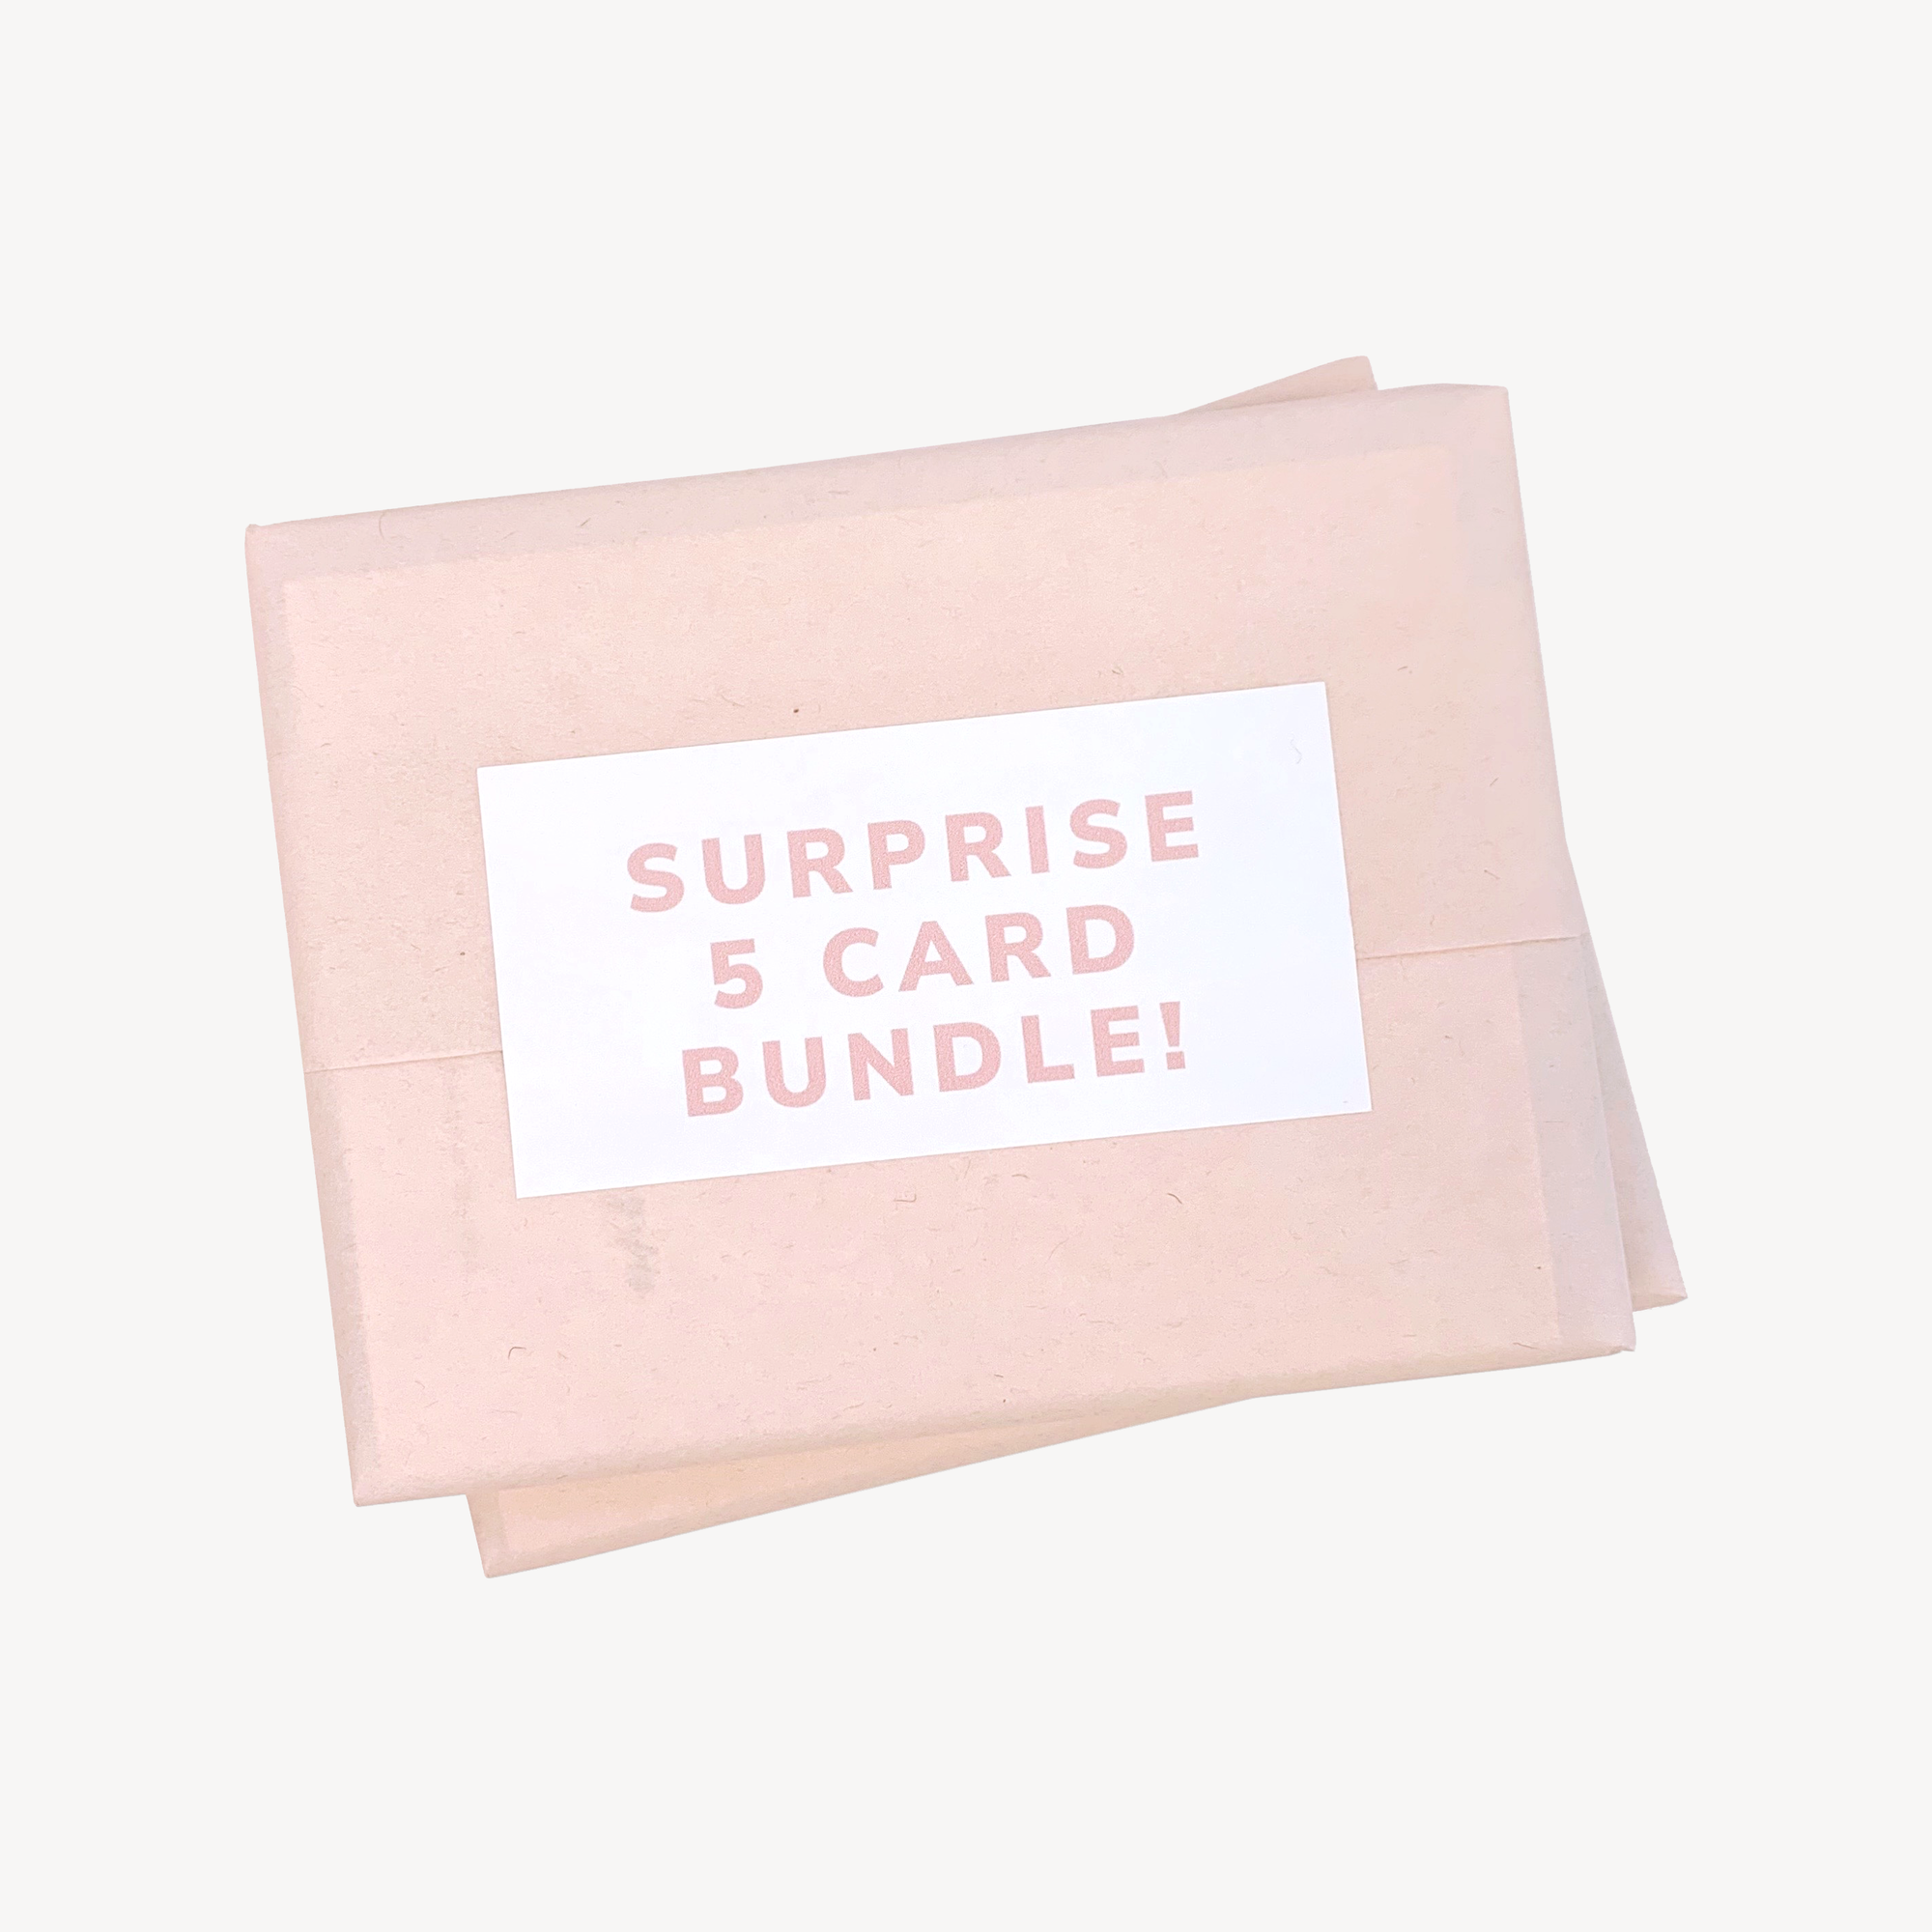 Surprise 5 Card Bundle!